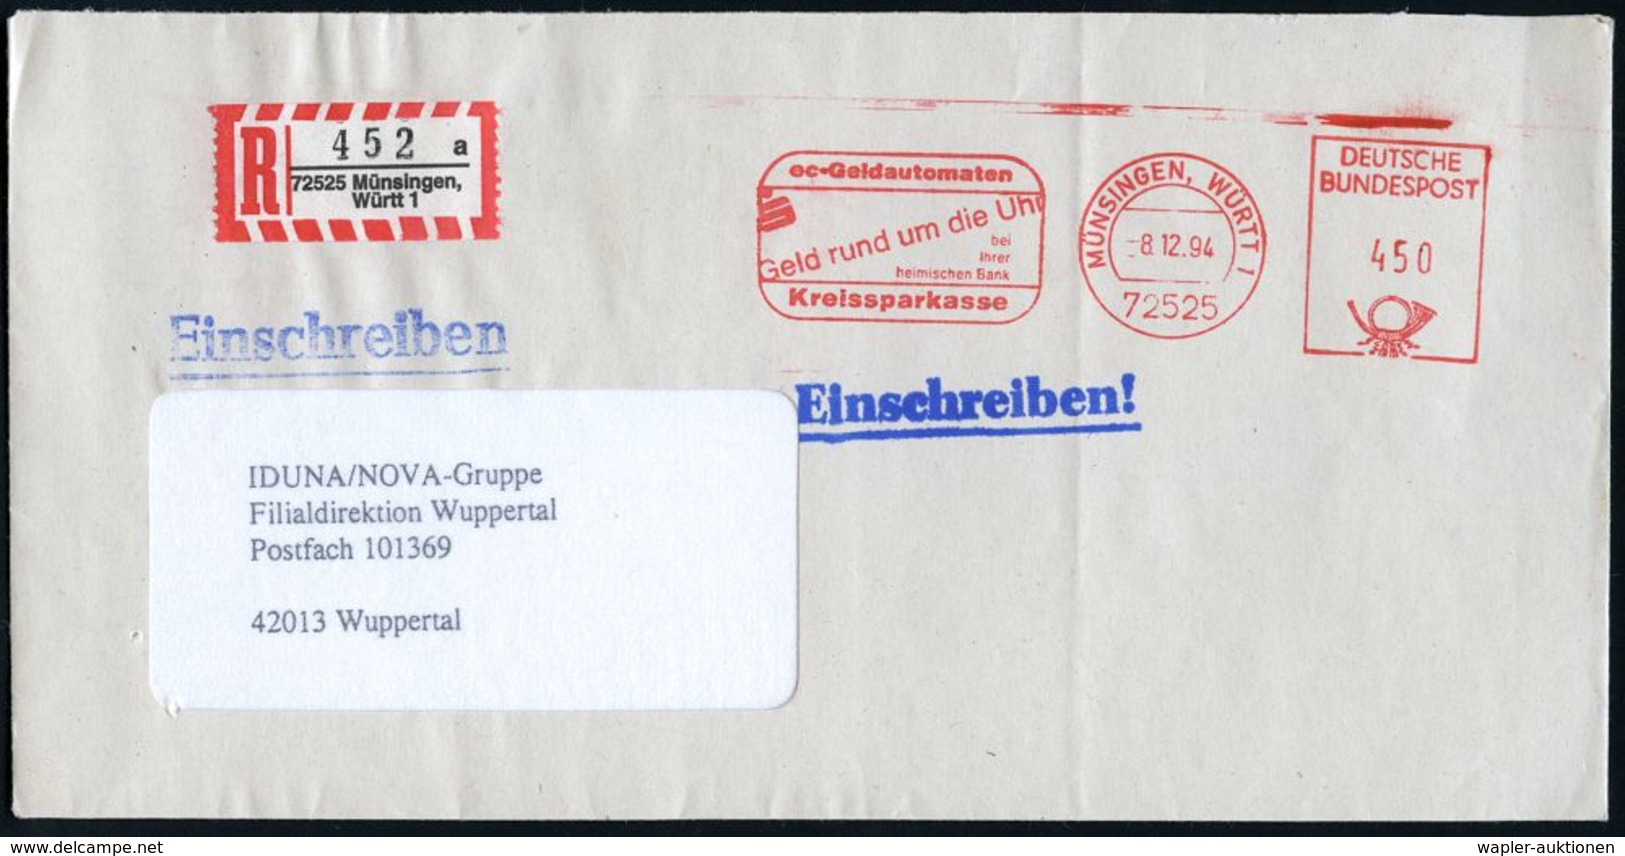 SPARKASSE / SPARBUCH : 72525 MÜNSINGEN,WÜRTT 1/ Ec-Geldautomaten../ Kreissparkasse 1994 (8.12.) AFS 450 Pf. + RZ: 72525  - Unclassified